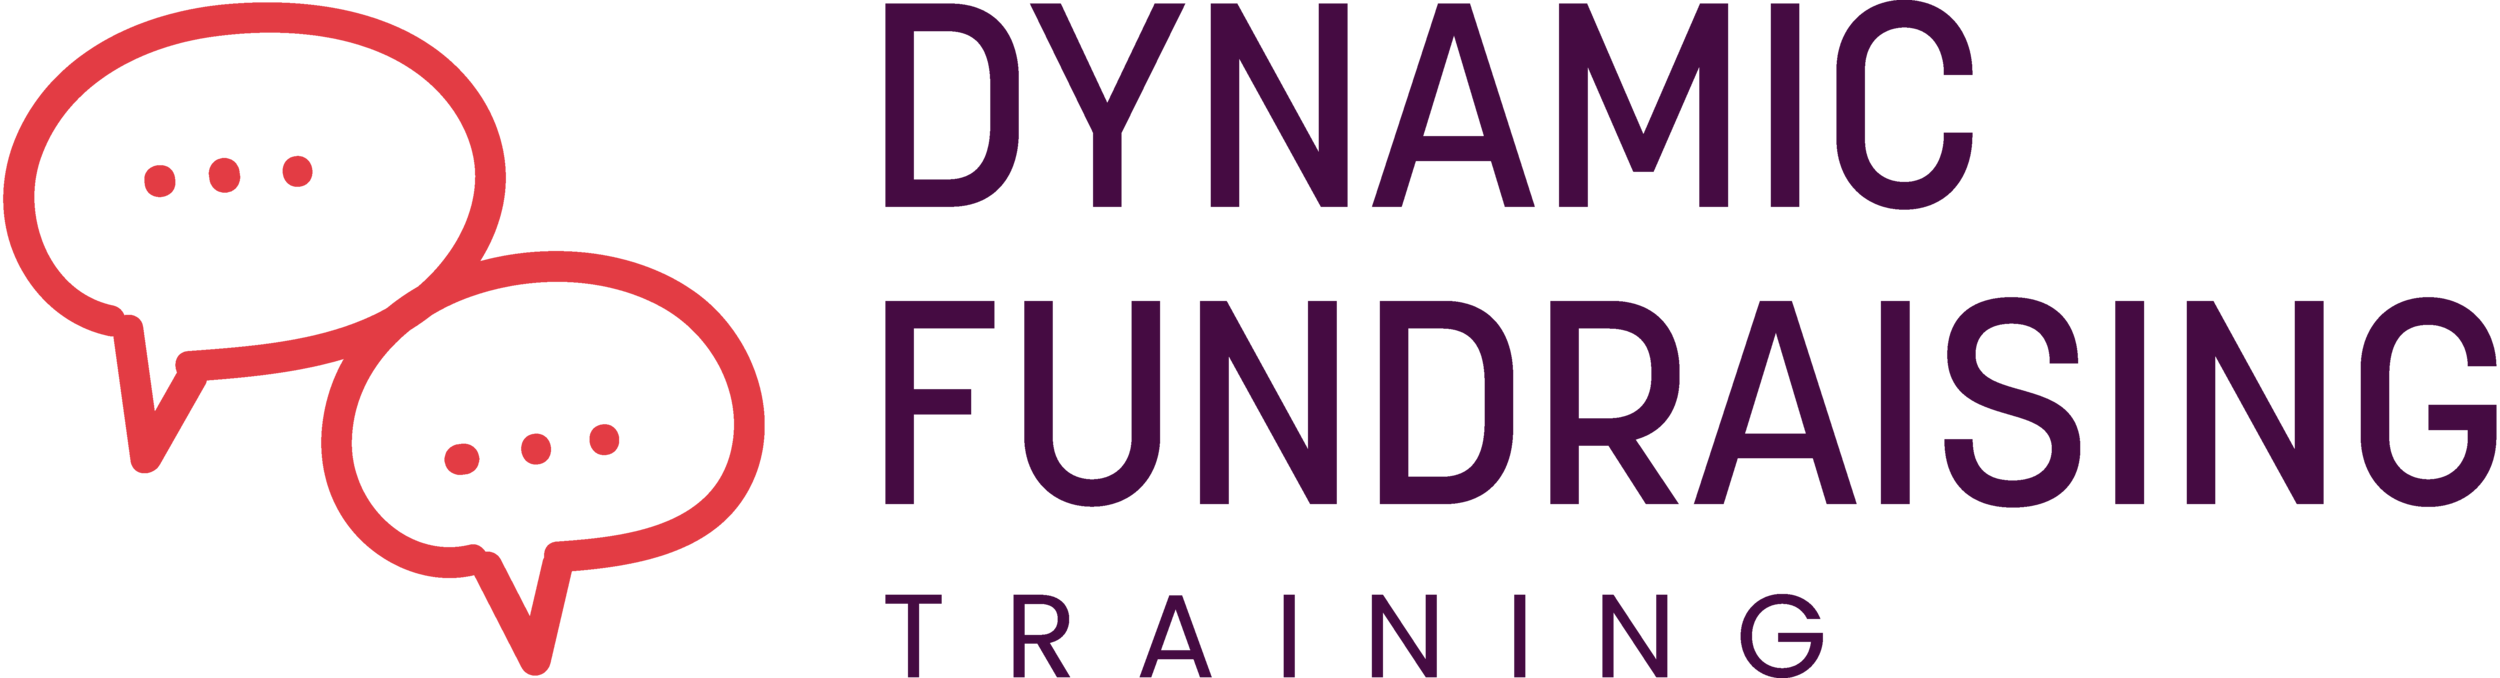 Dynamic Fundraising Training